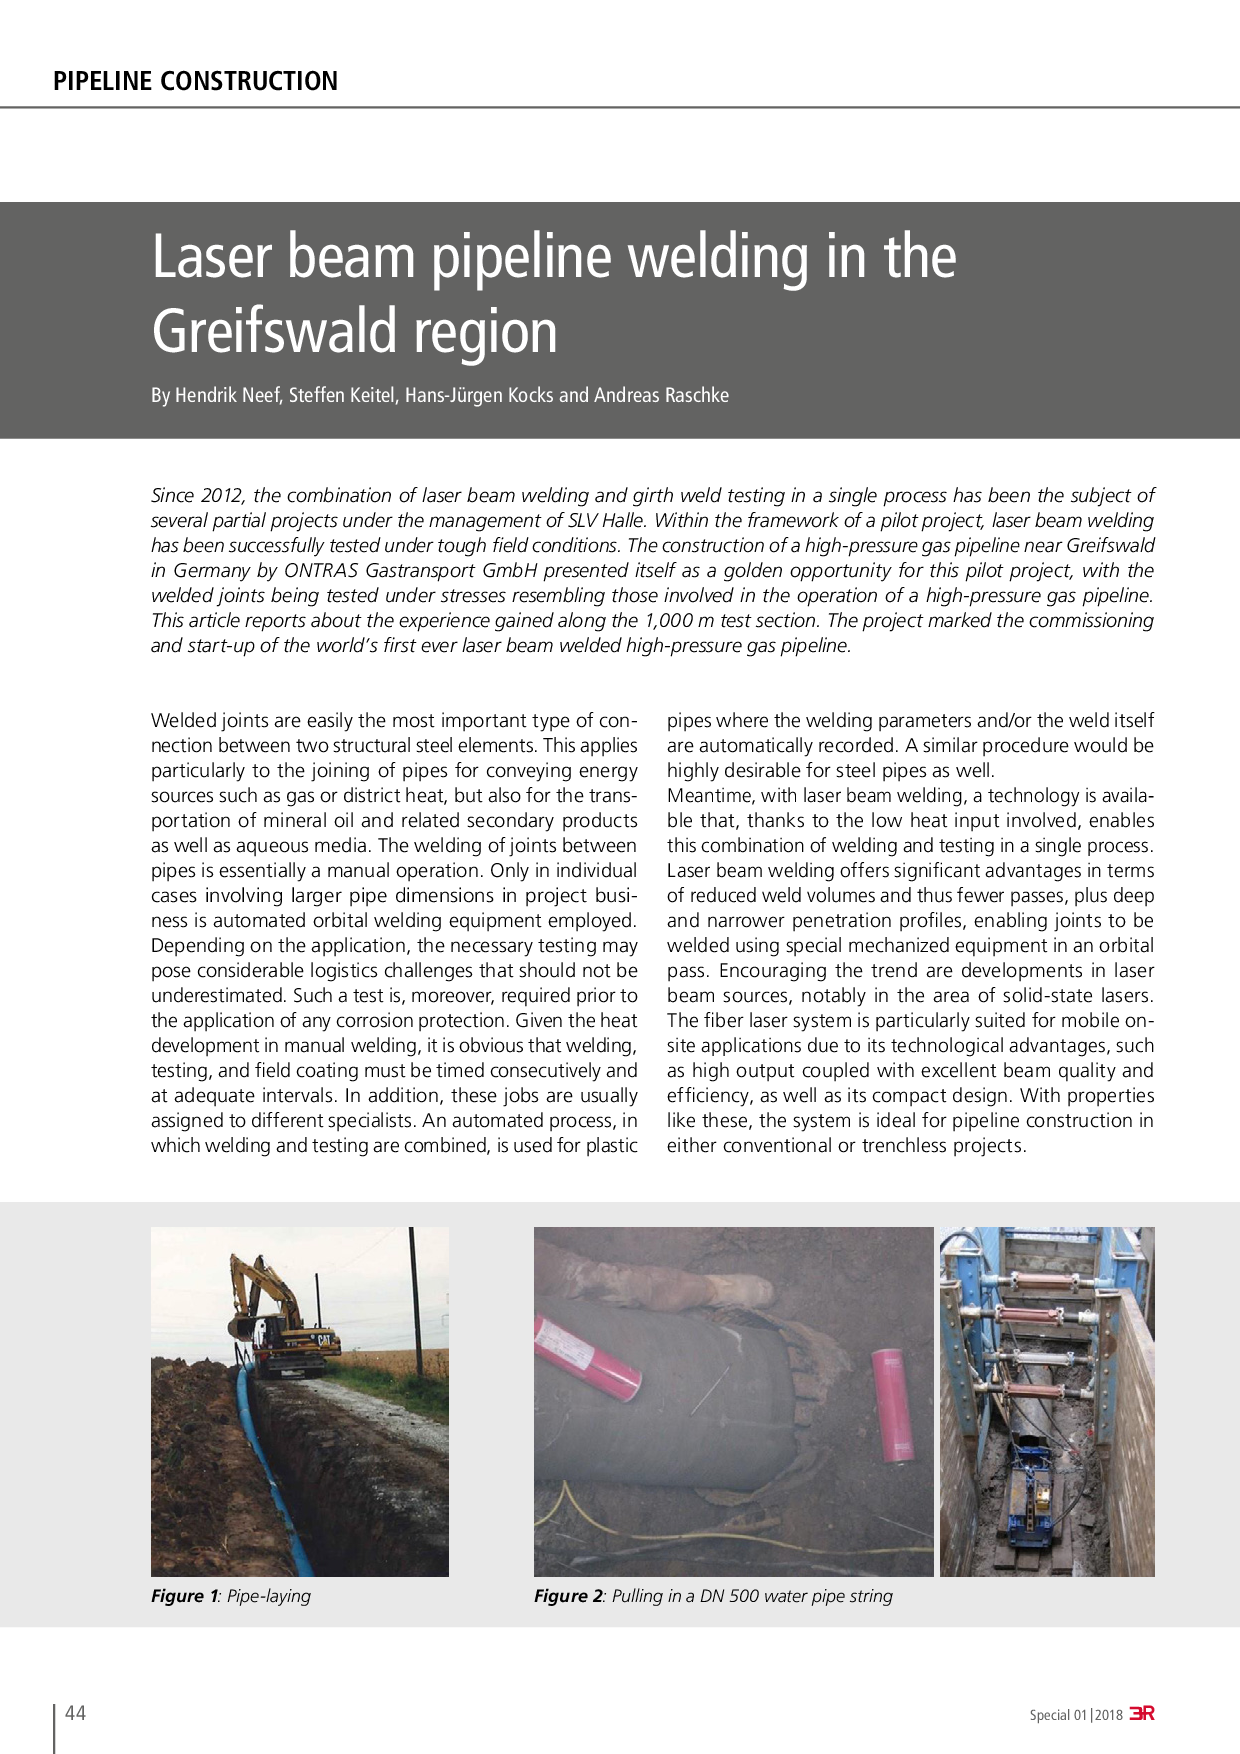 Laser beam pipeline welding in the Greifswald region